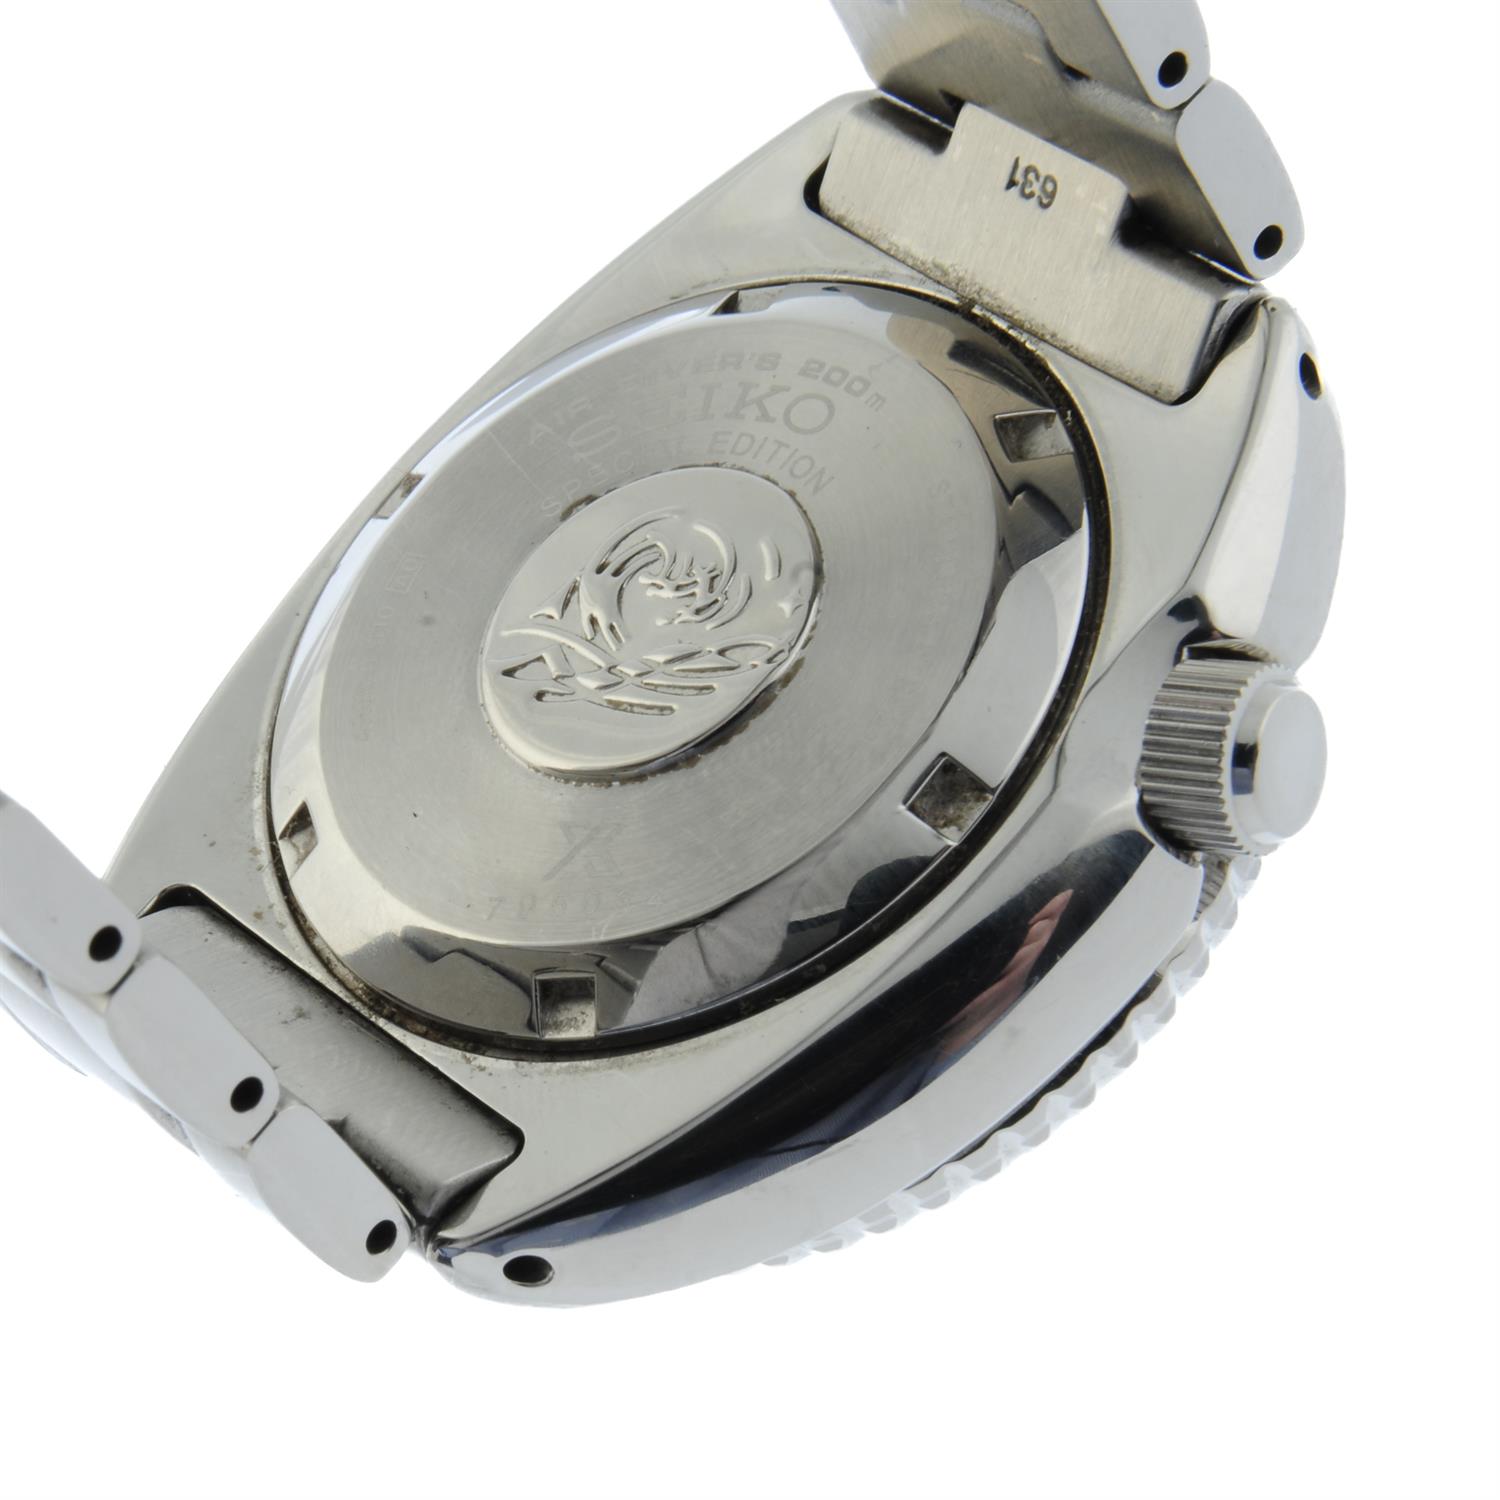 Seiko - a Prospex PADI watch, 45mm. - Image 4 of 4